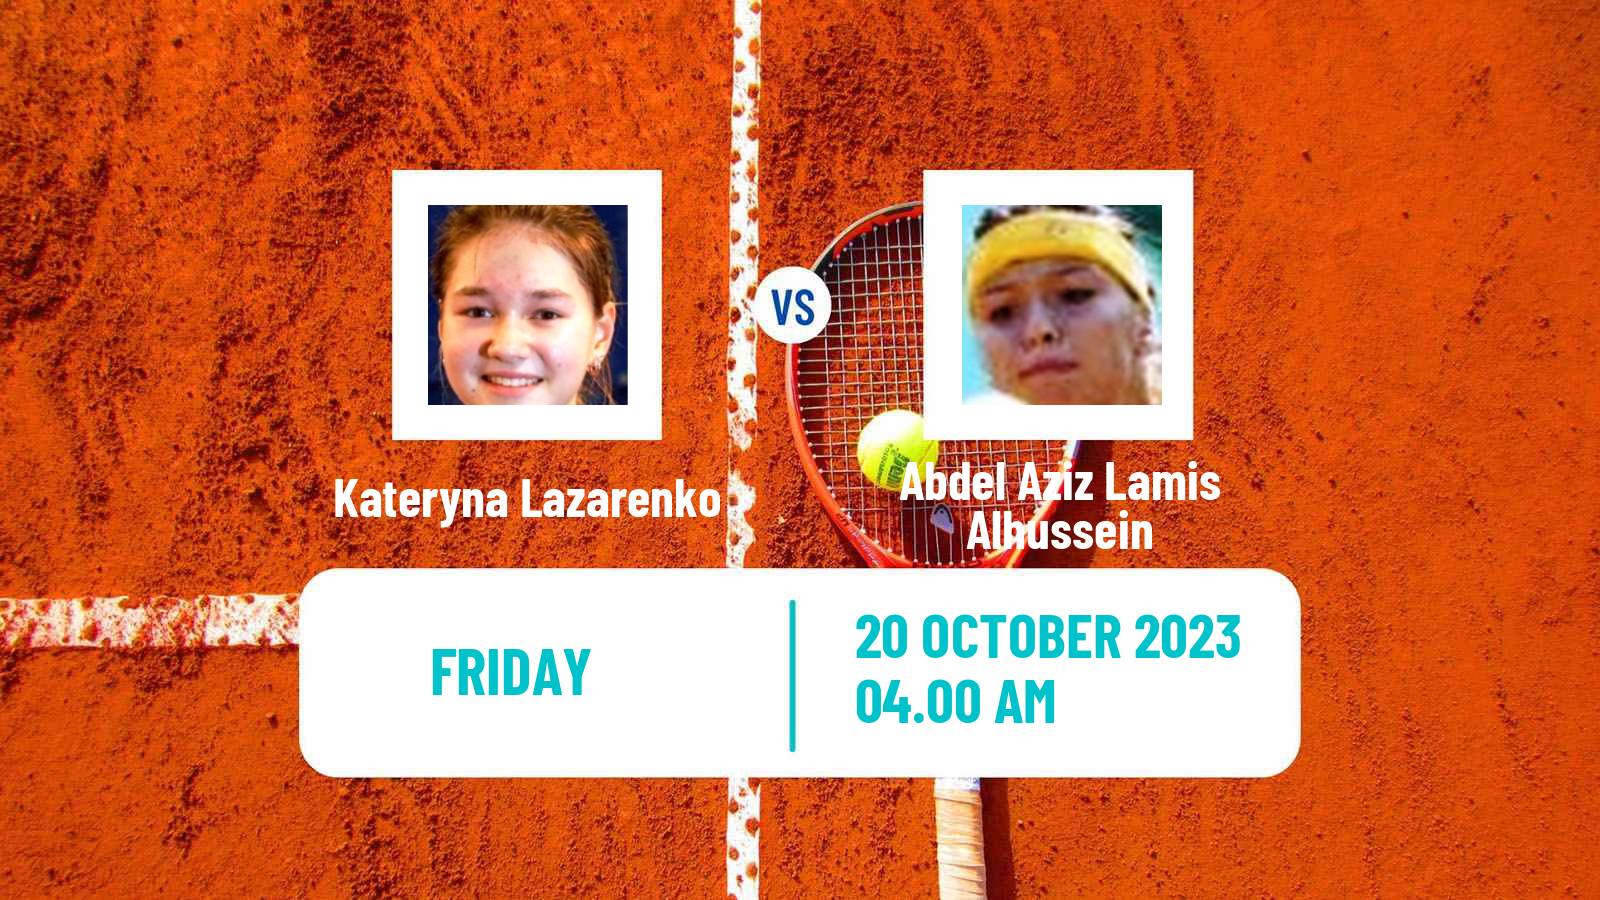 Tennis ITF W15 Sharm Elsheikh 15 Women Kateryna Lazarenko - Abdel Aziz Lamis Alhussein